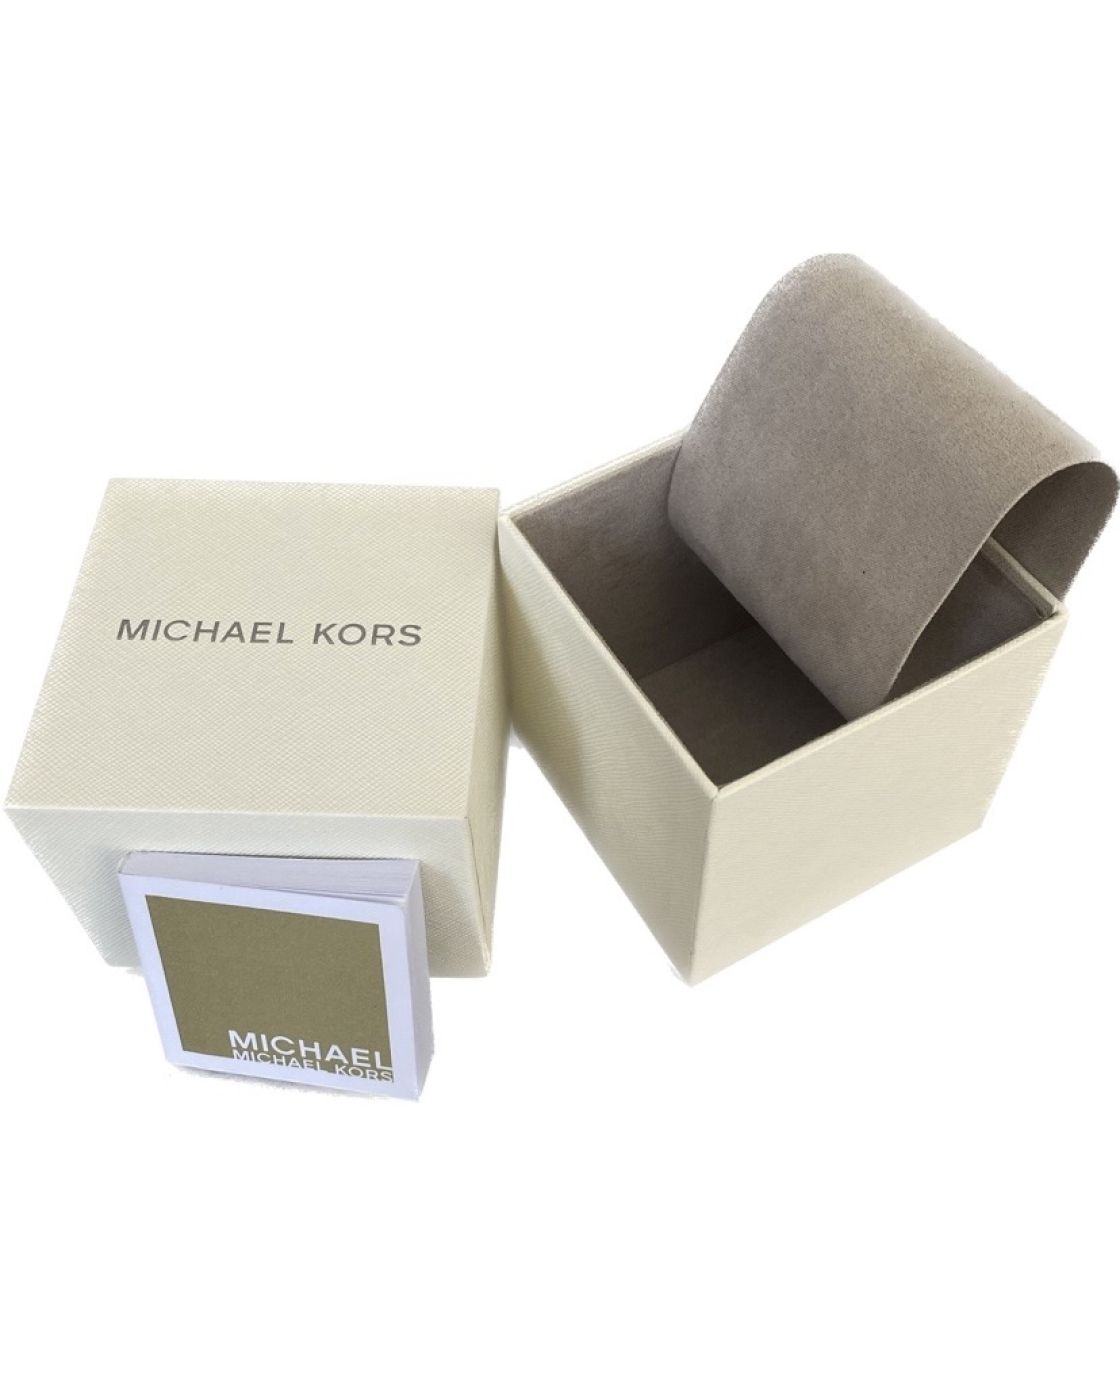 Michael Kors Slim Runway Chronograph MK9060 | Clachic